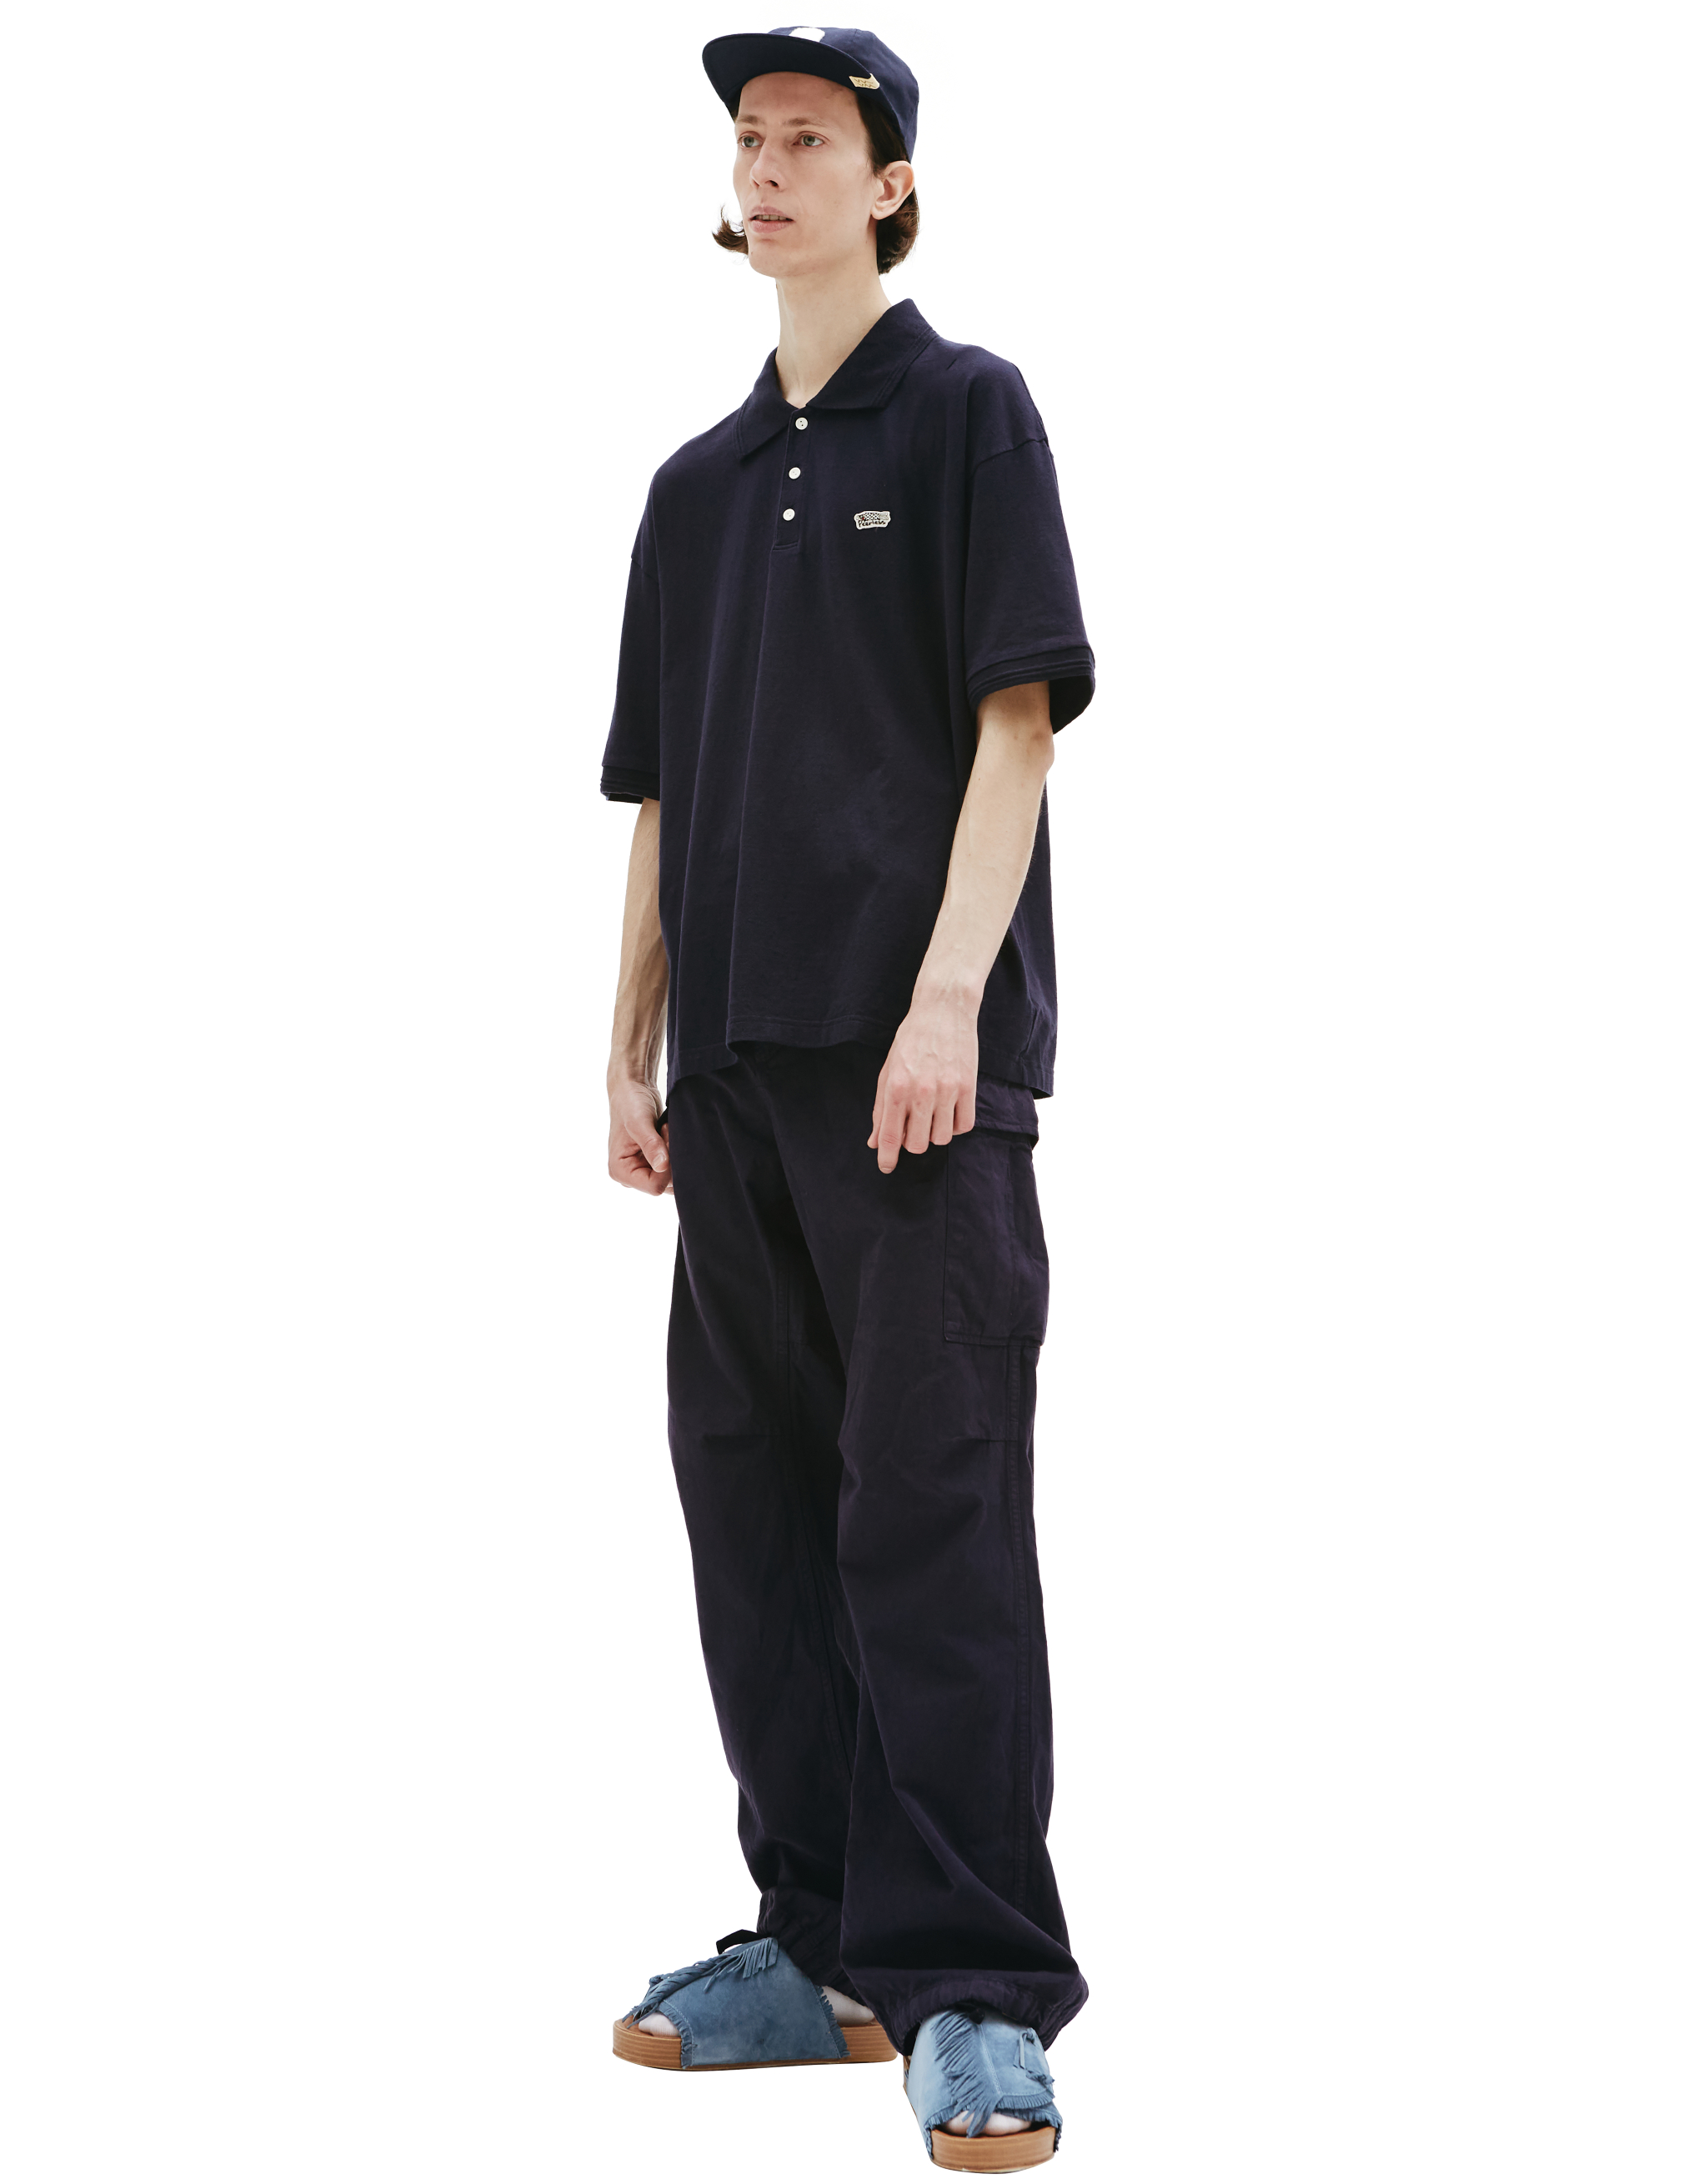 Поло Jumbo Weller с вышивкой visvim 0122105010018/navy, размер 5;4 0122105010018/navy - фото 1